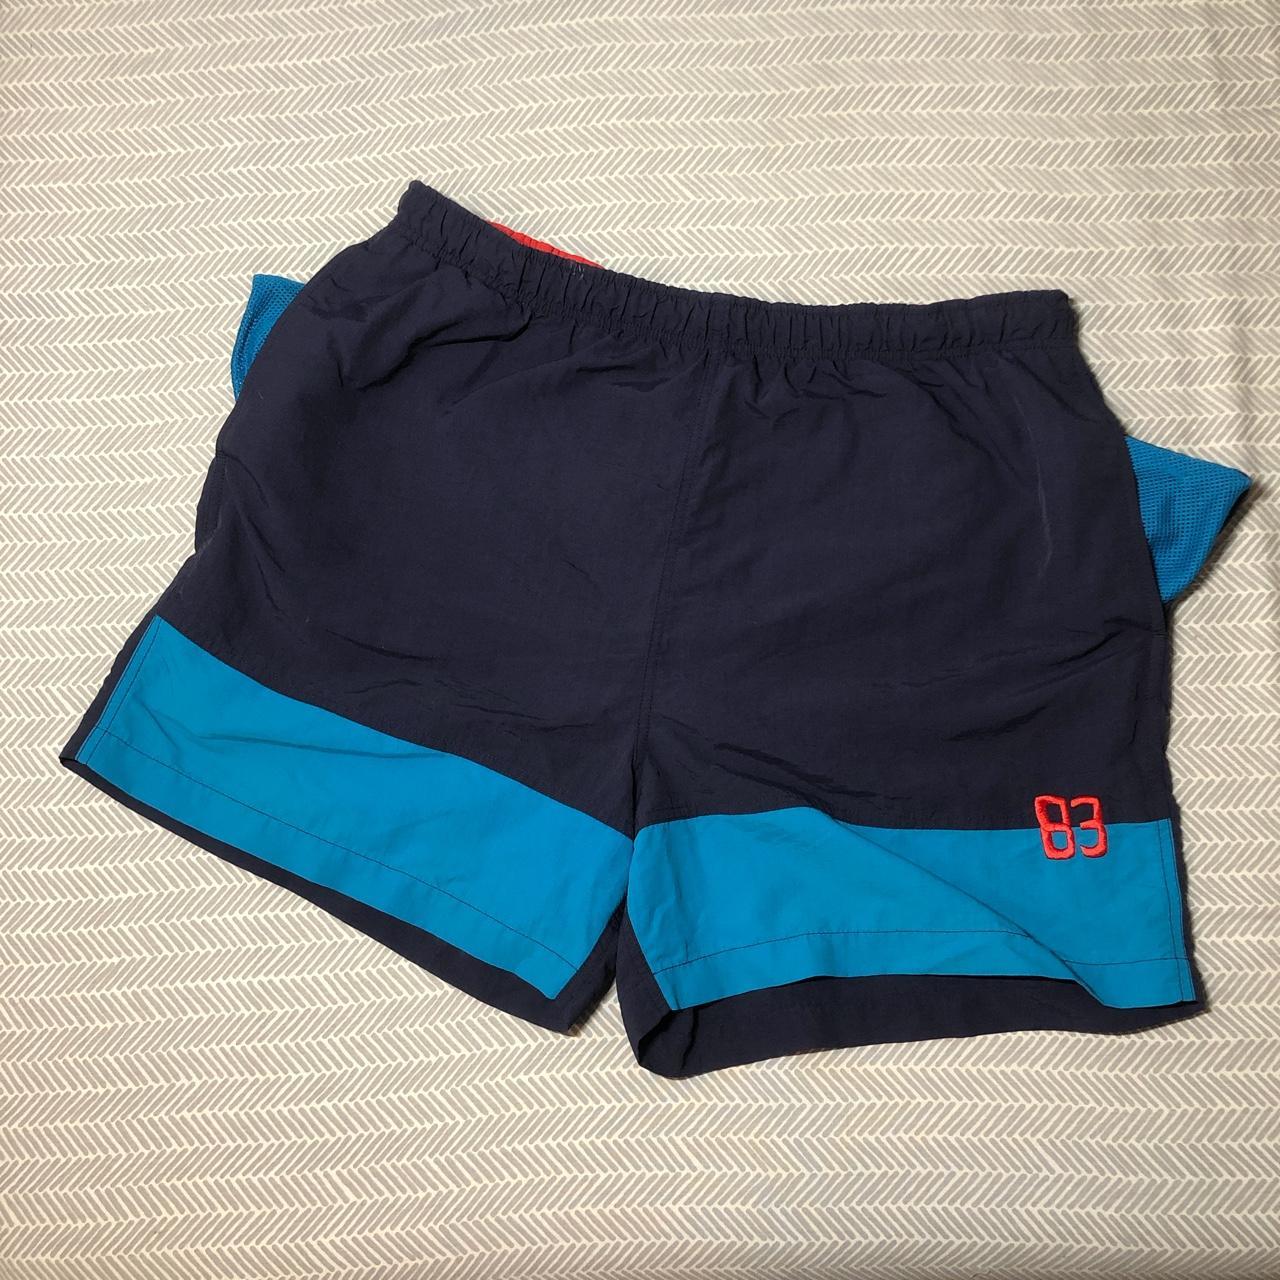 Nautica Men's Navy and Blue Swim-briefs-shorts - 4